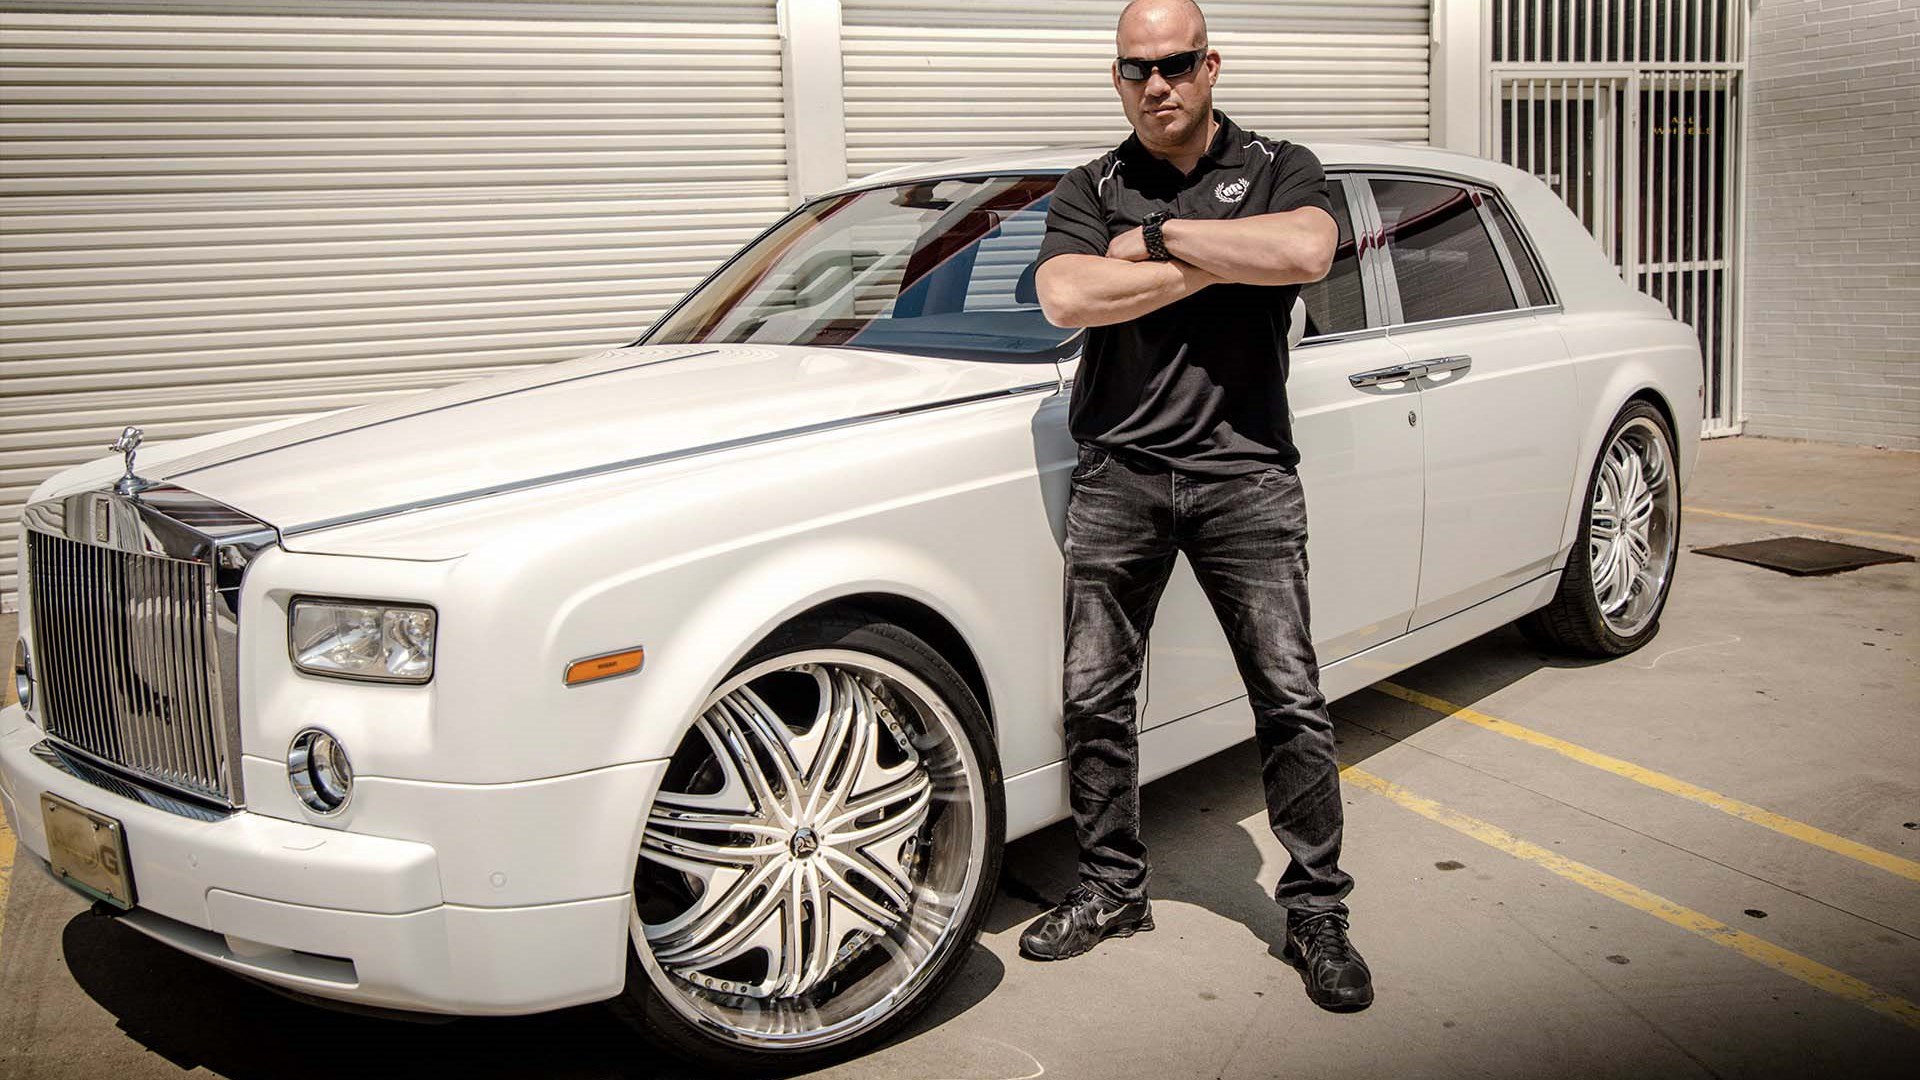 Tito with his elegant Rolls-Royce Phantom. (Source: Autotrader)